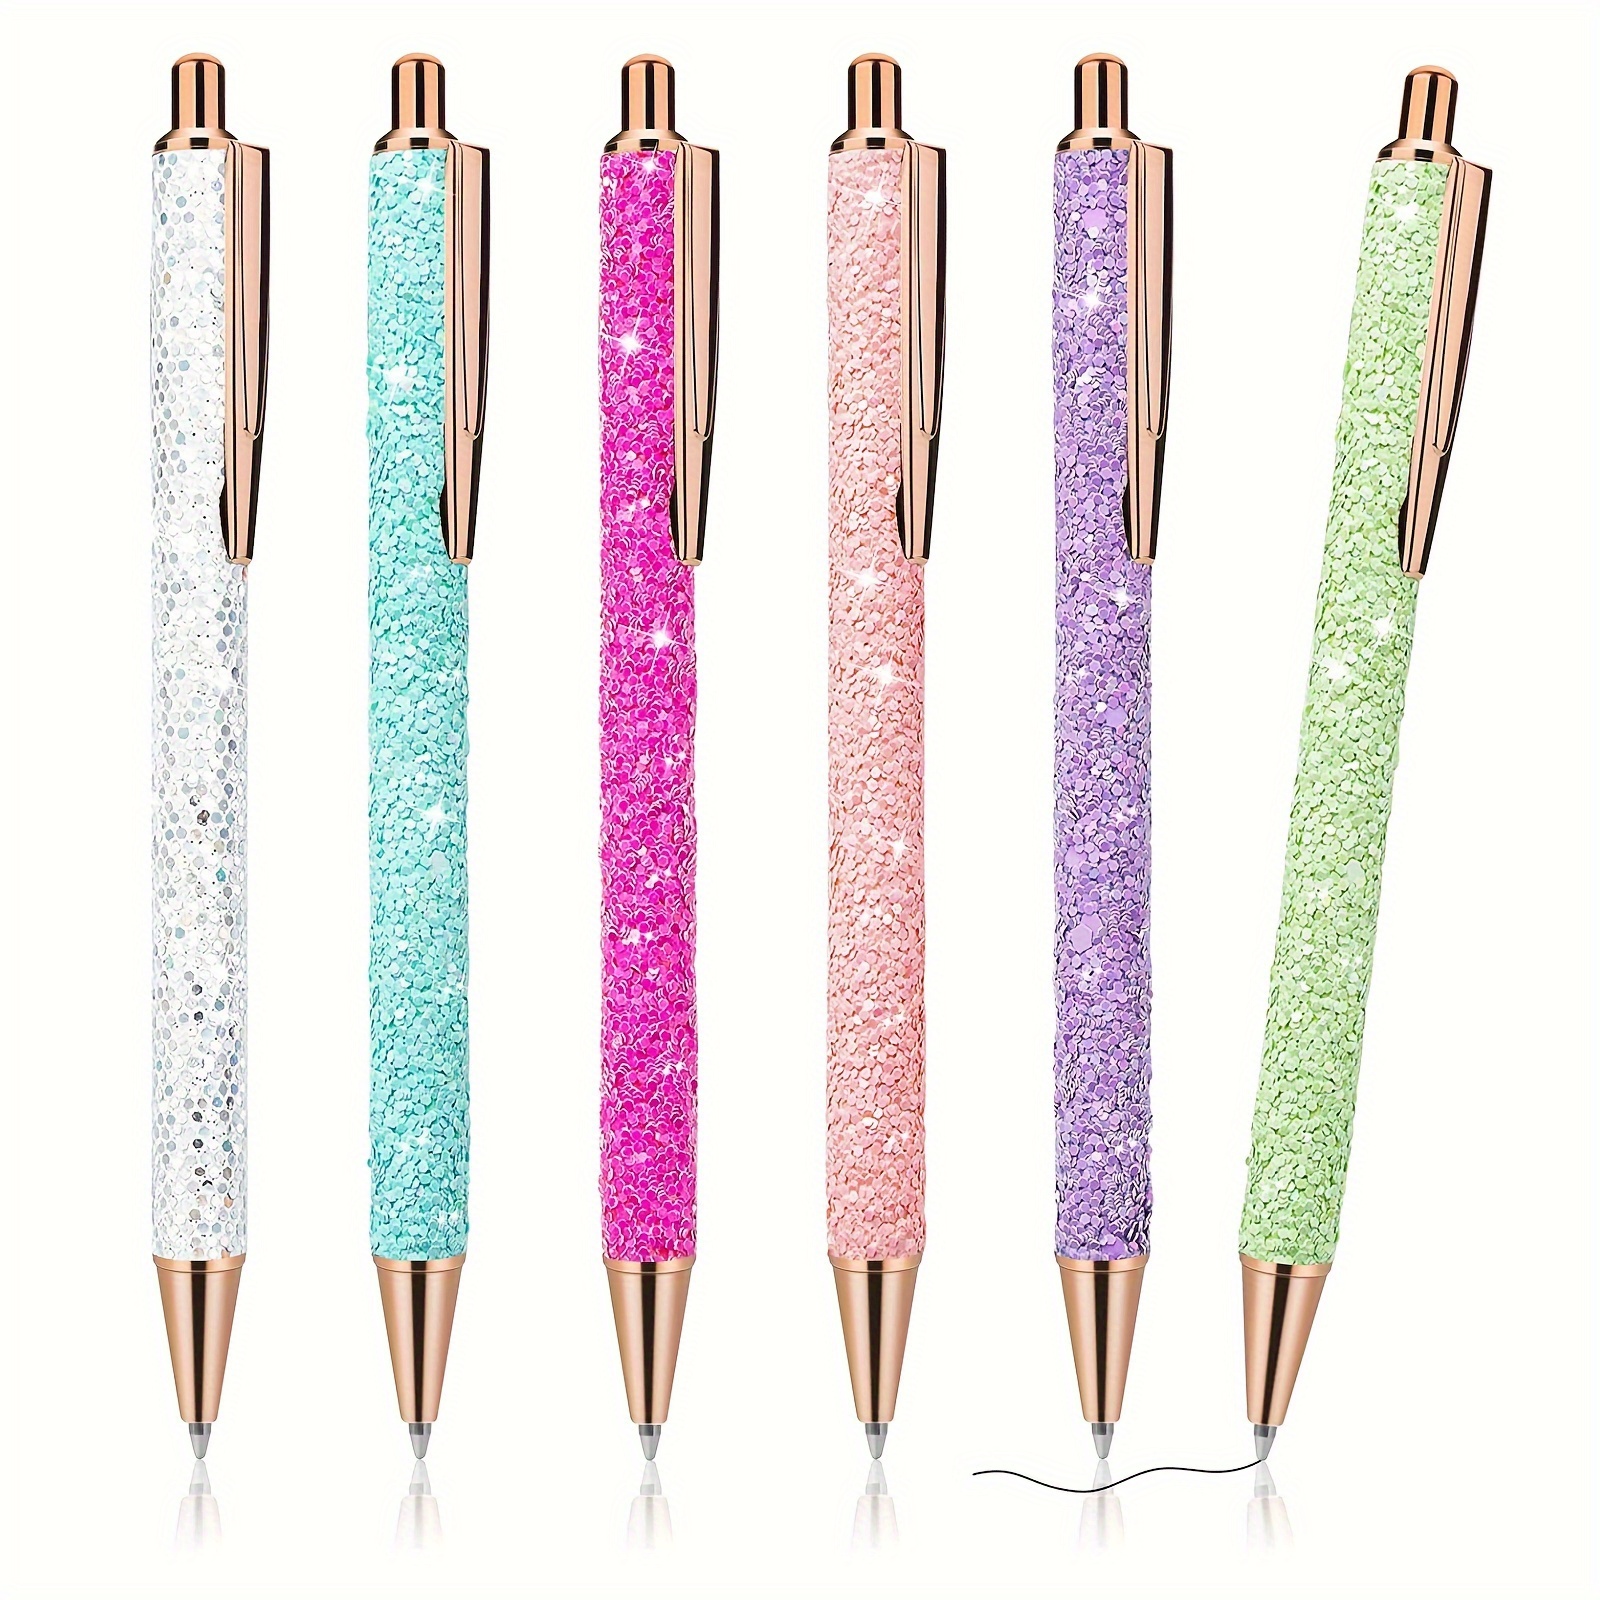 

6pcs Glittery Metal Pens - Retractable, 1.0mm Fine Point, Ergonomic & Ambidextrous - Fantasy-themed, Perfect Gift For Teachers